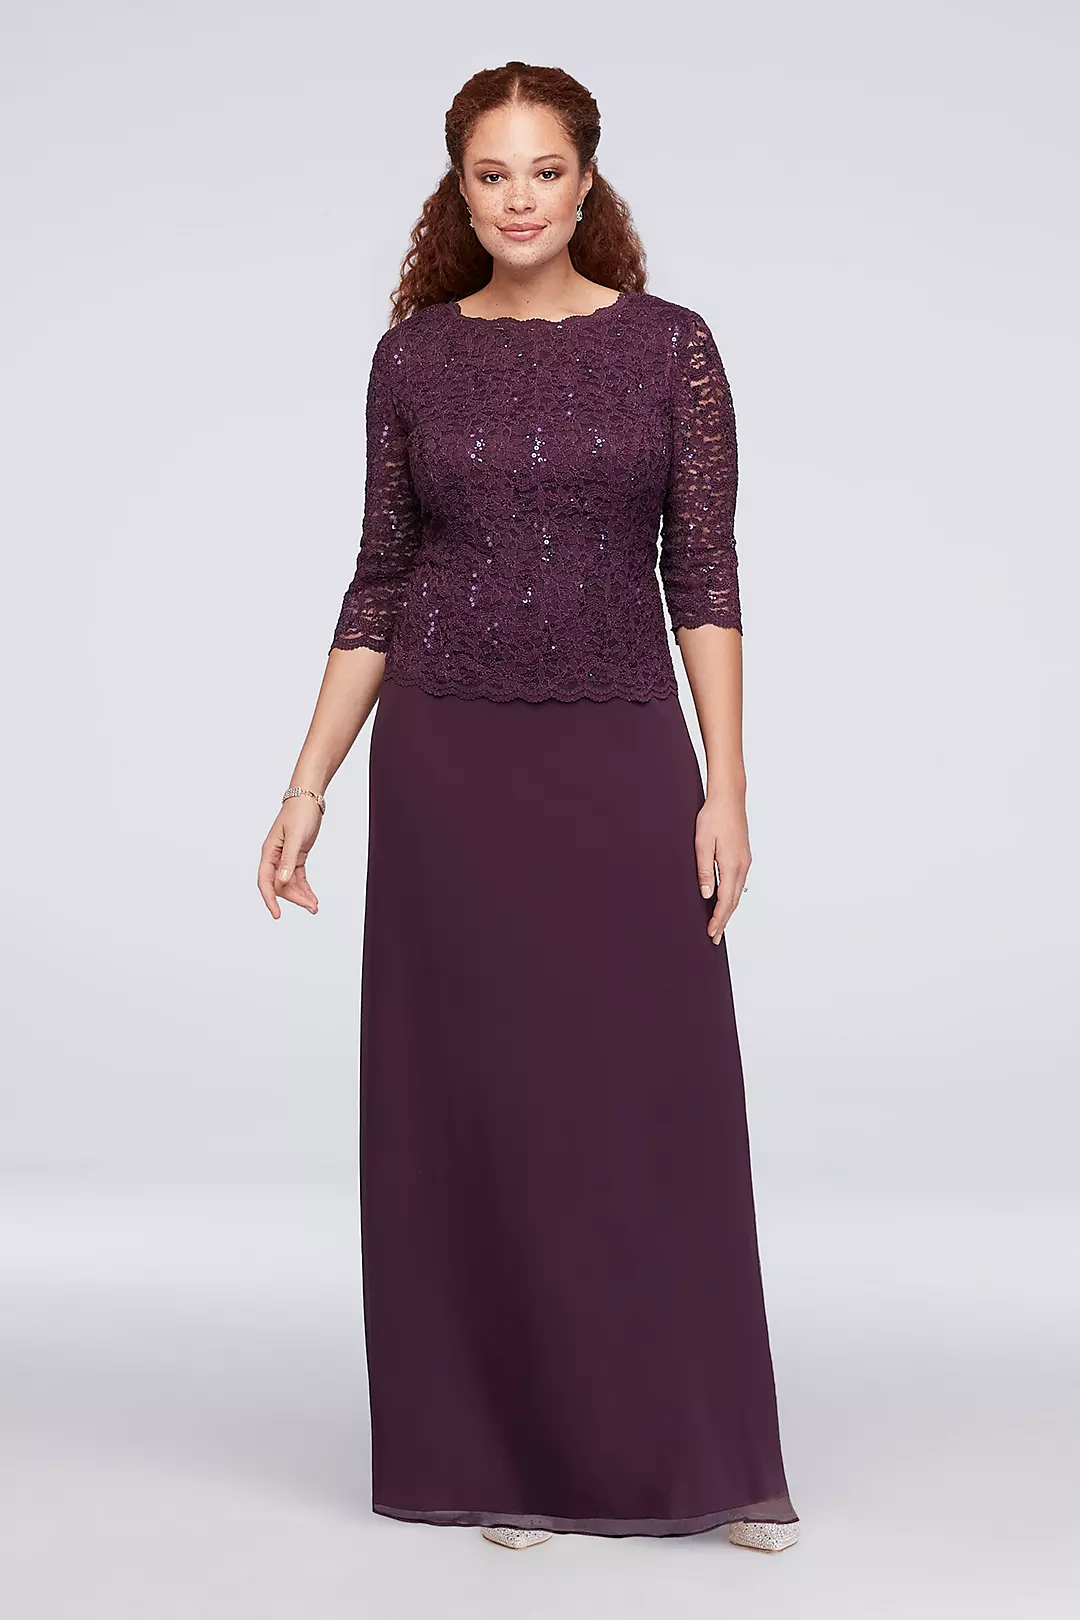 Lace Chiffon Mock Two-Piece Plus Size Gown Image